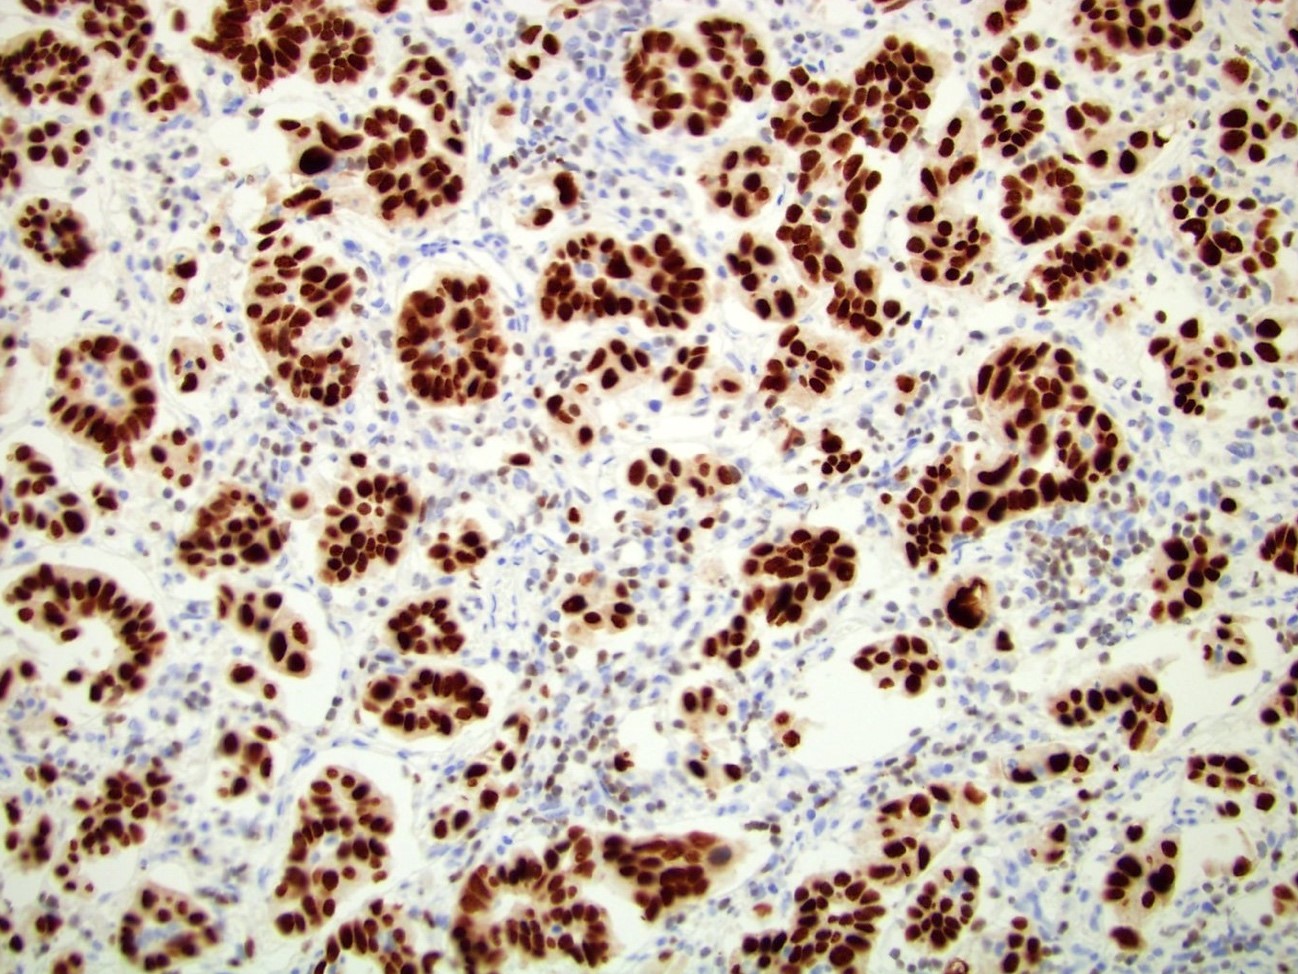 Invasive urothelial carcinoma